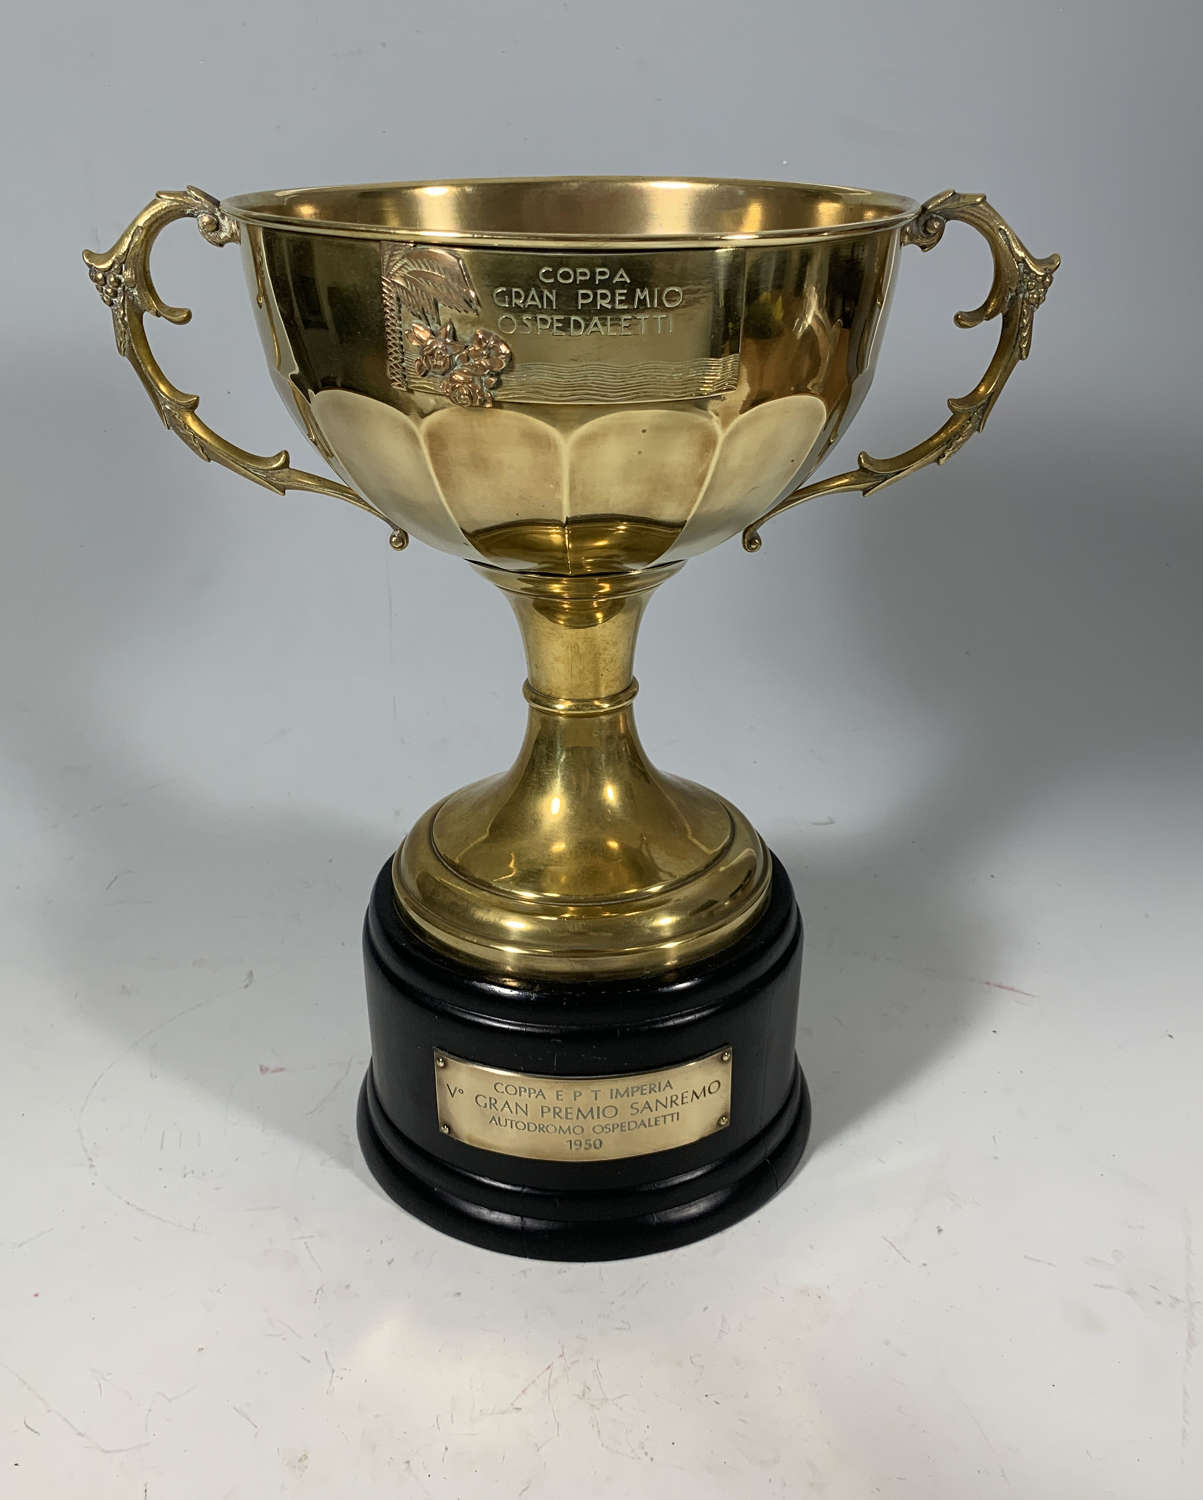 Juan Manuel Fangio's 1950 San Remo F1 GP winners trophy